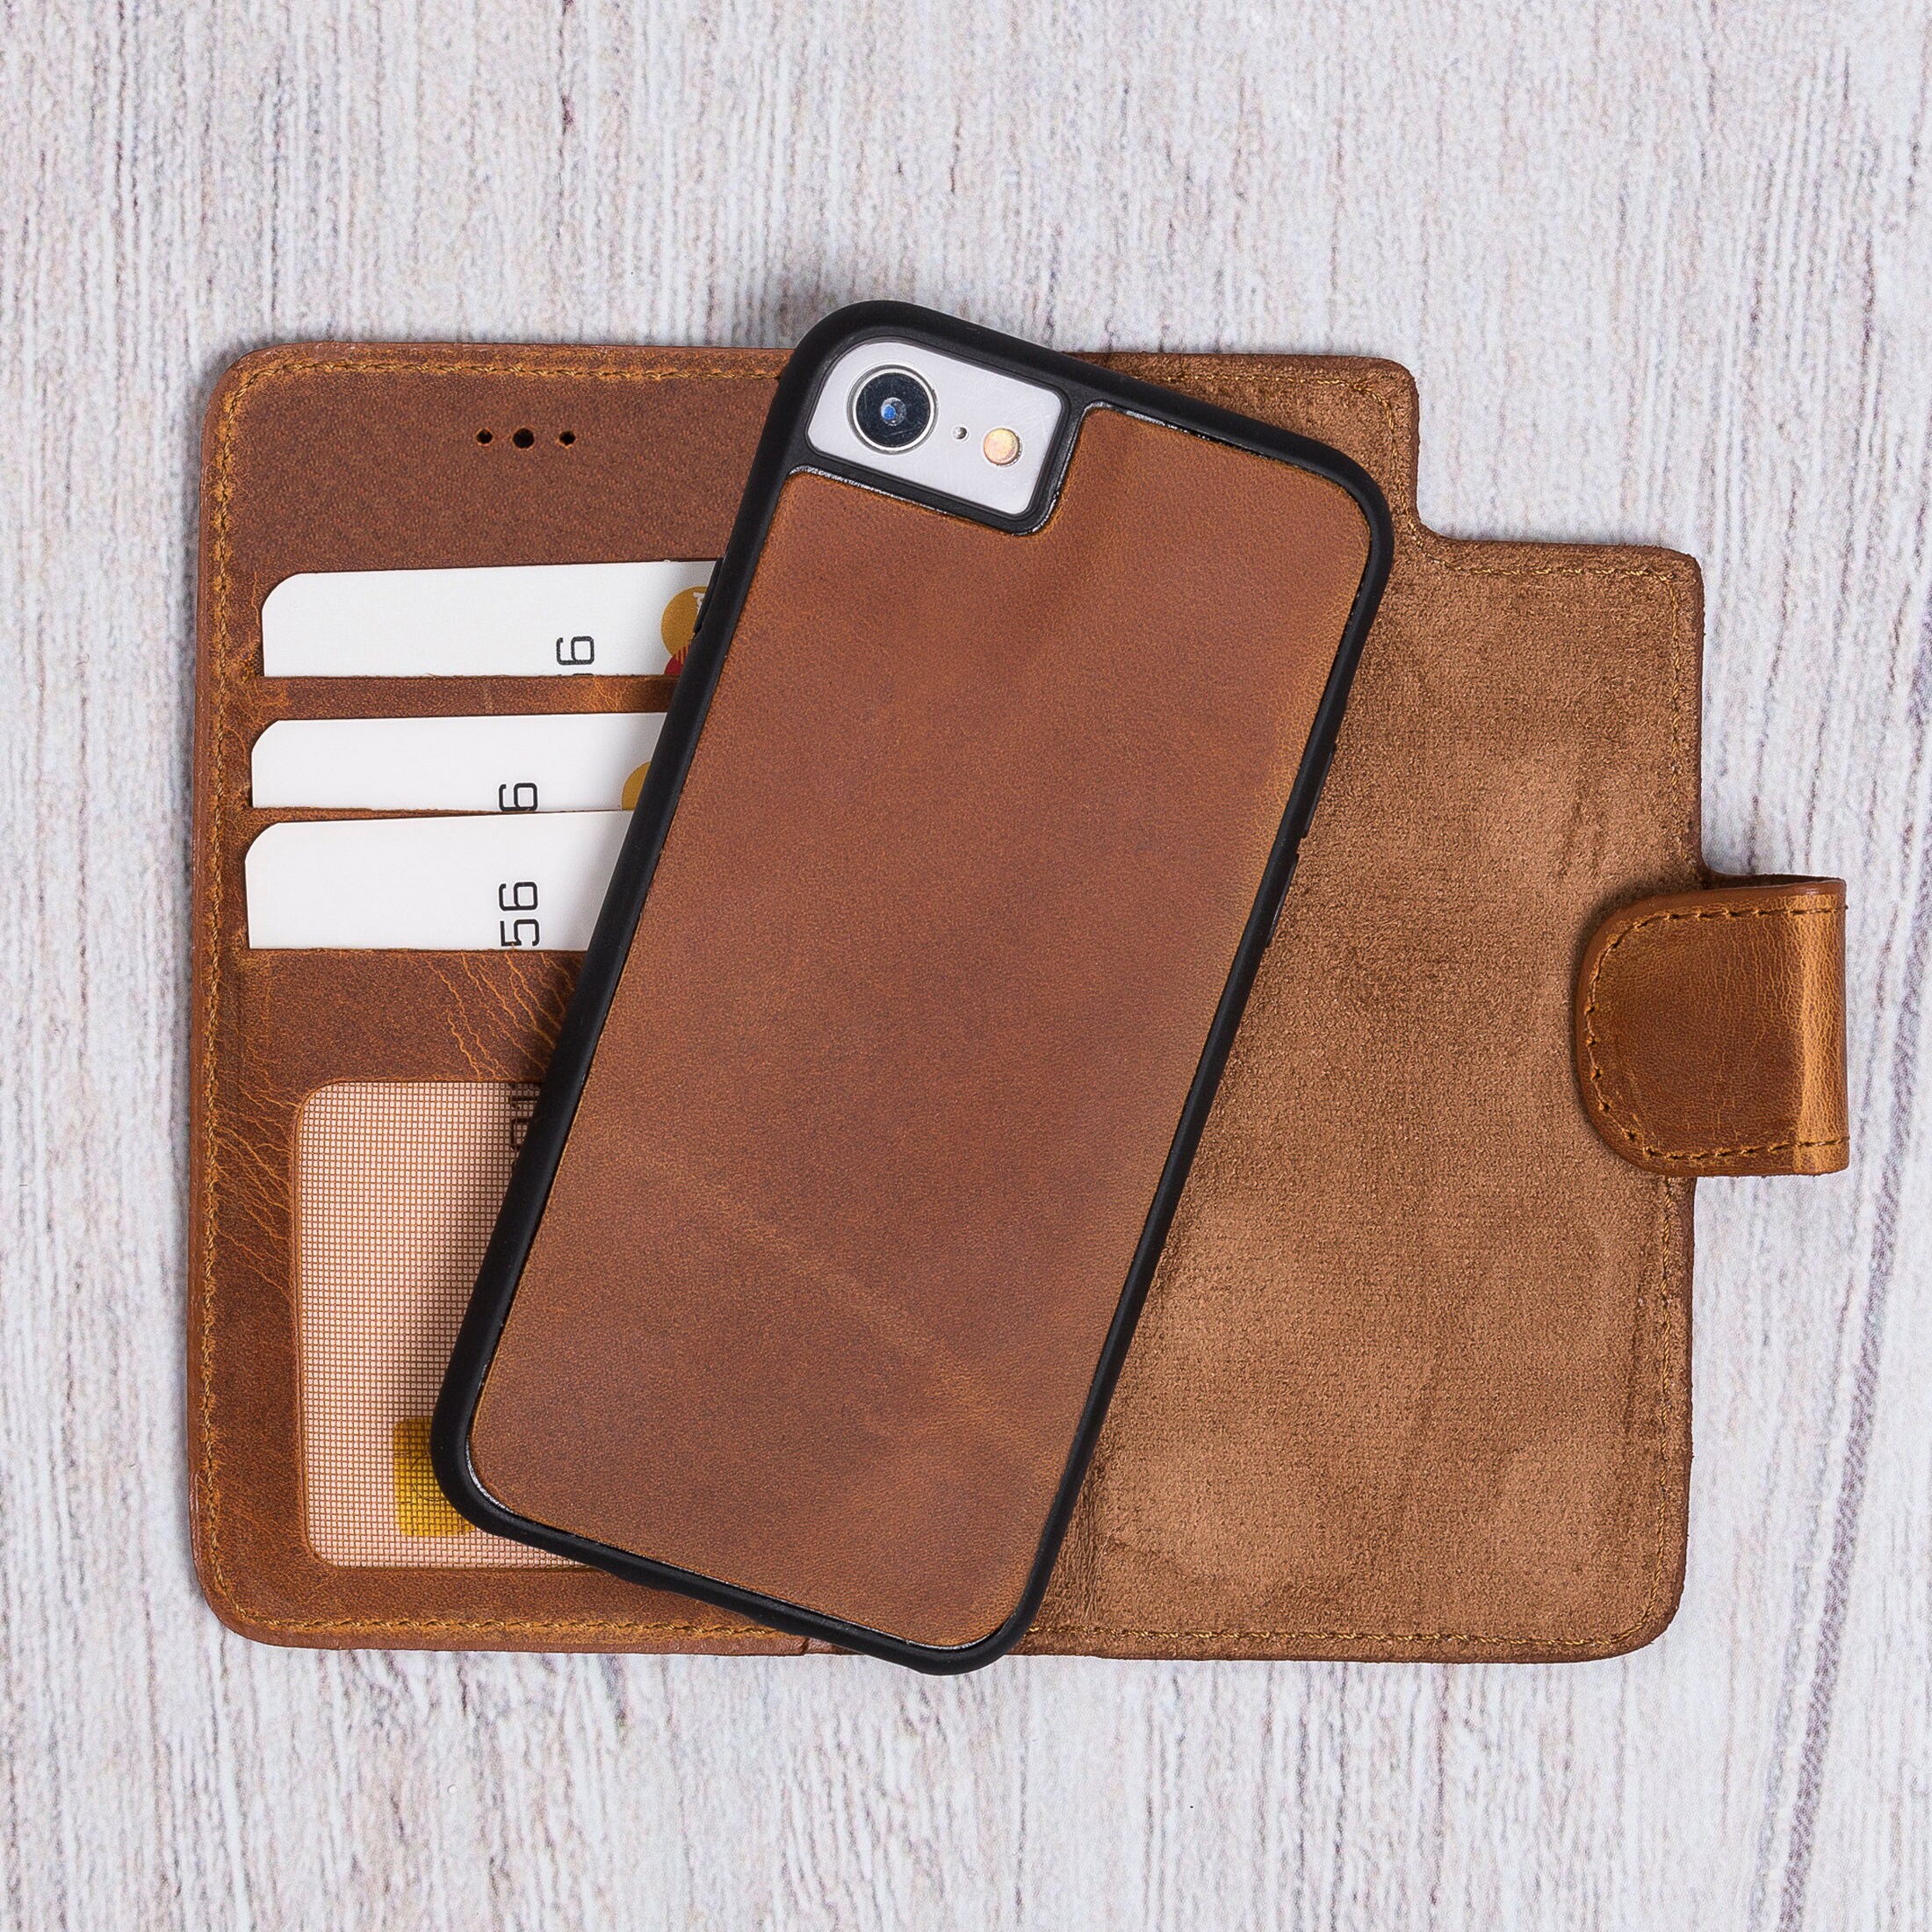 SE 3rd Case Wallet Leather Iphone SE 2020 -